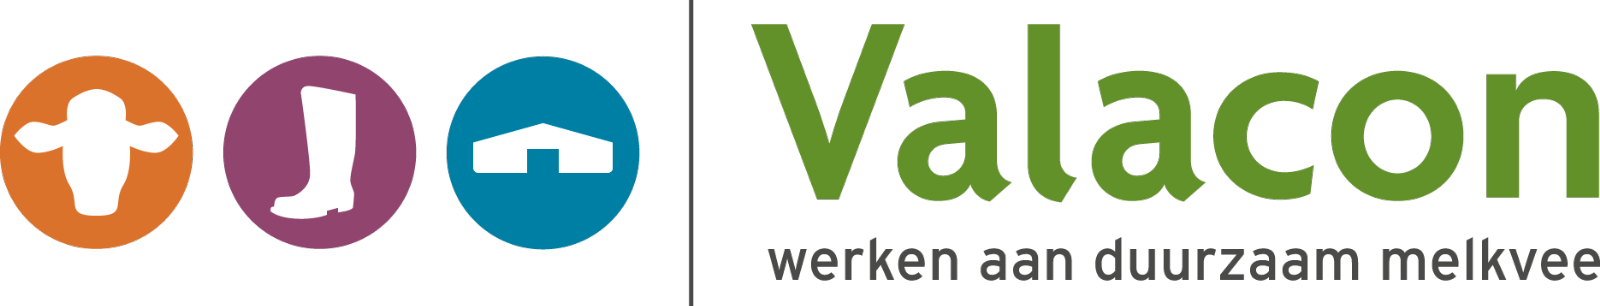 Valacon logo